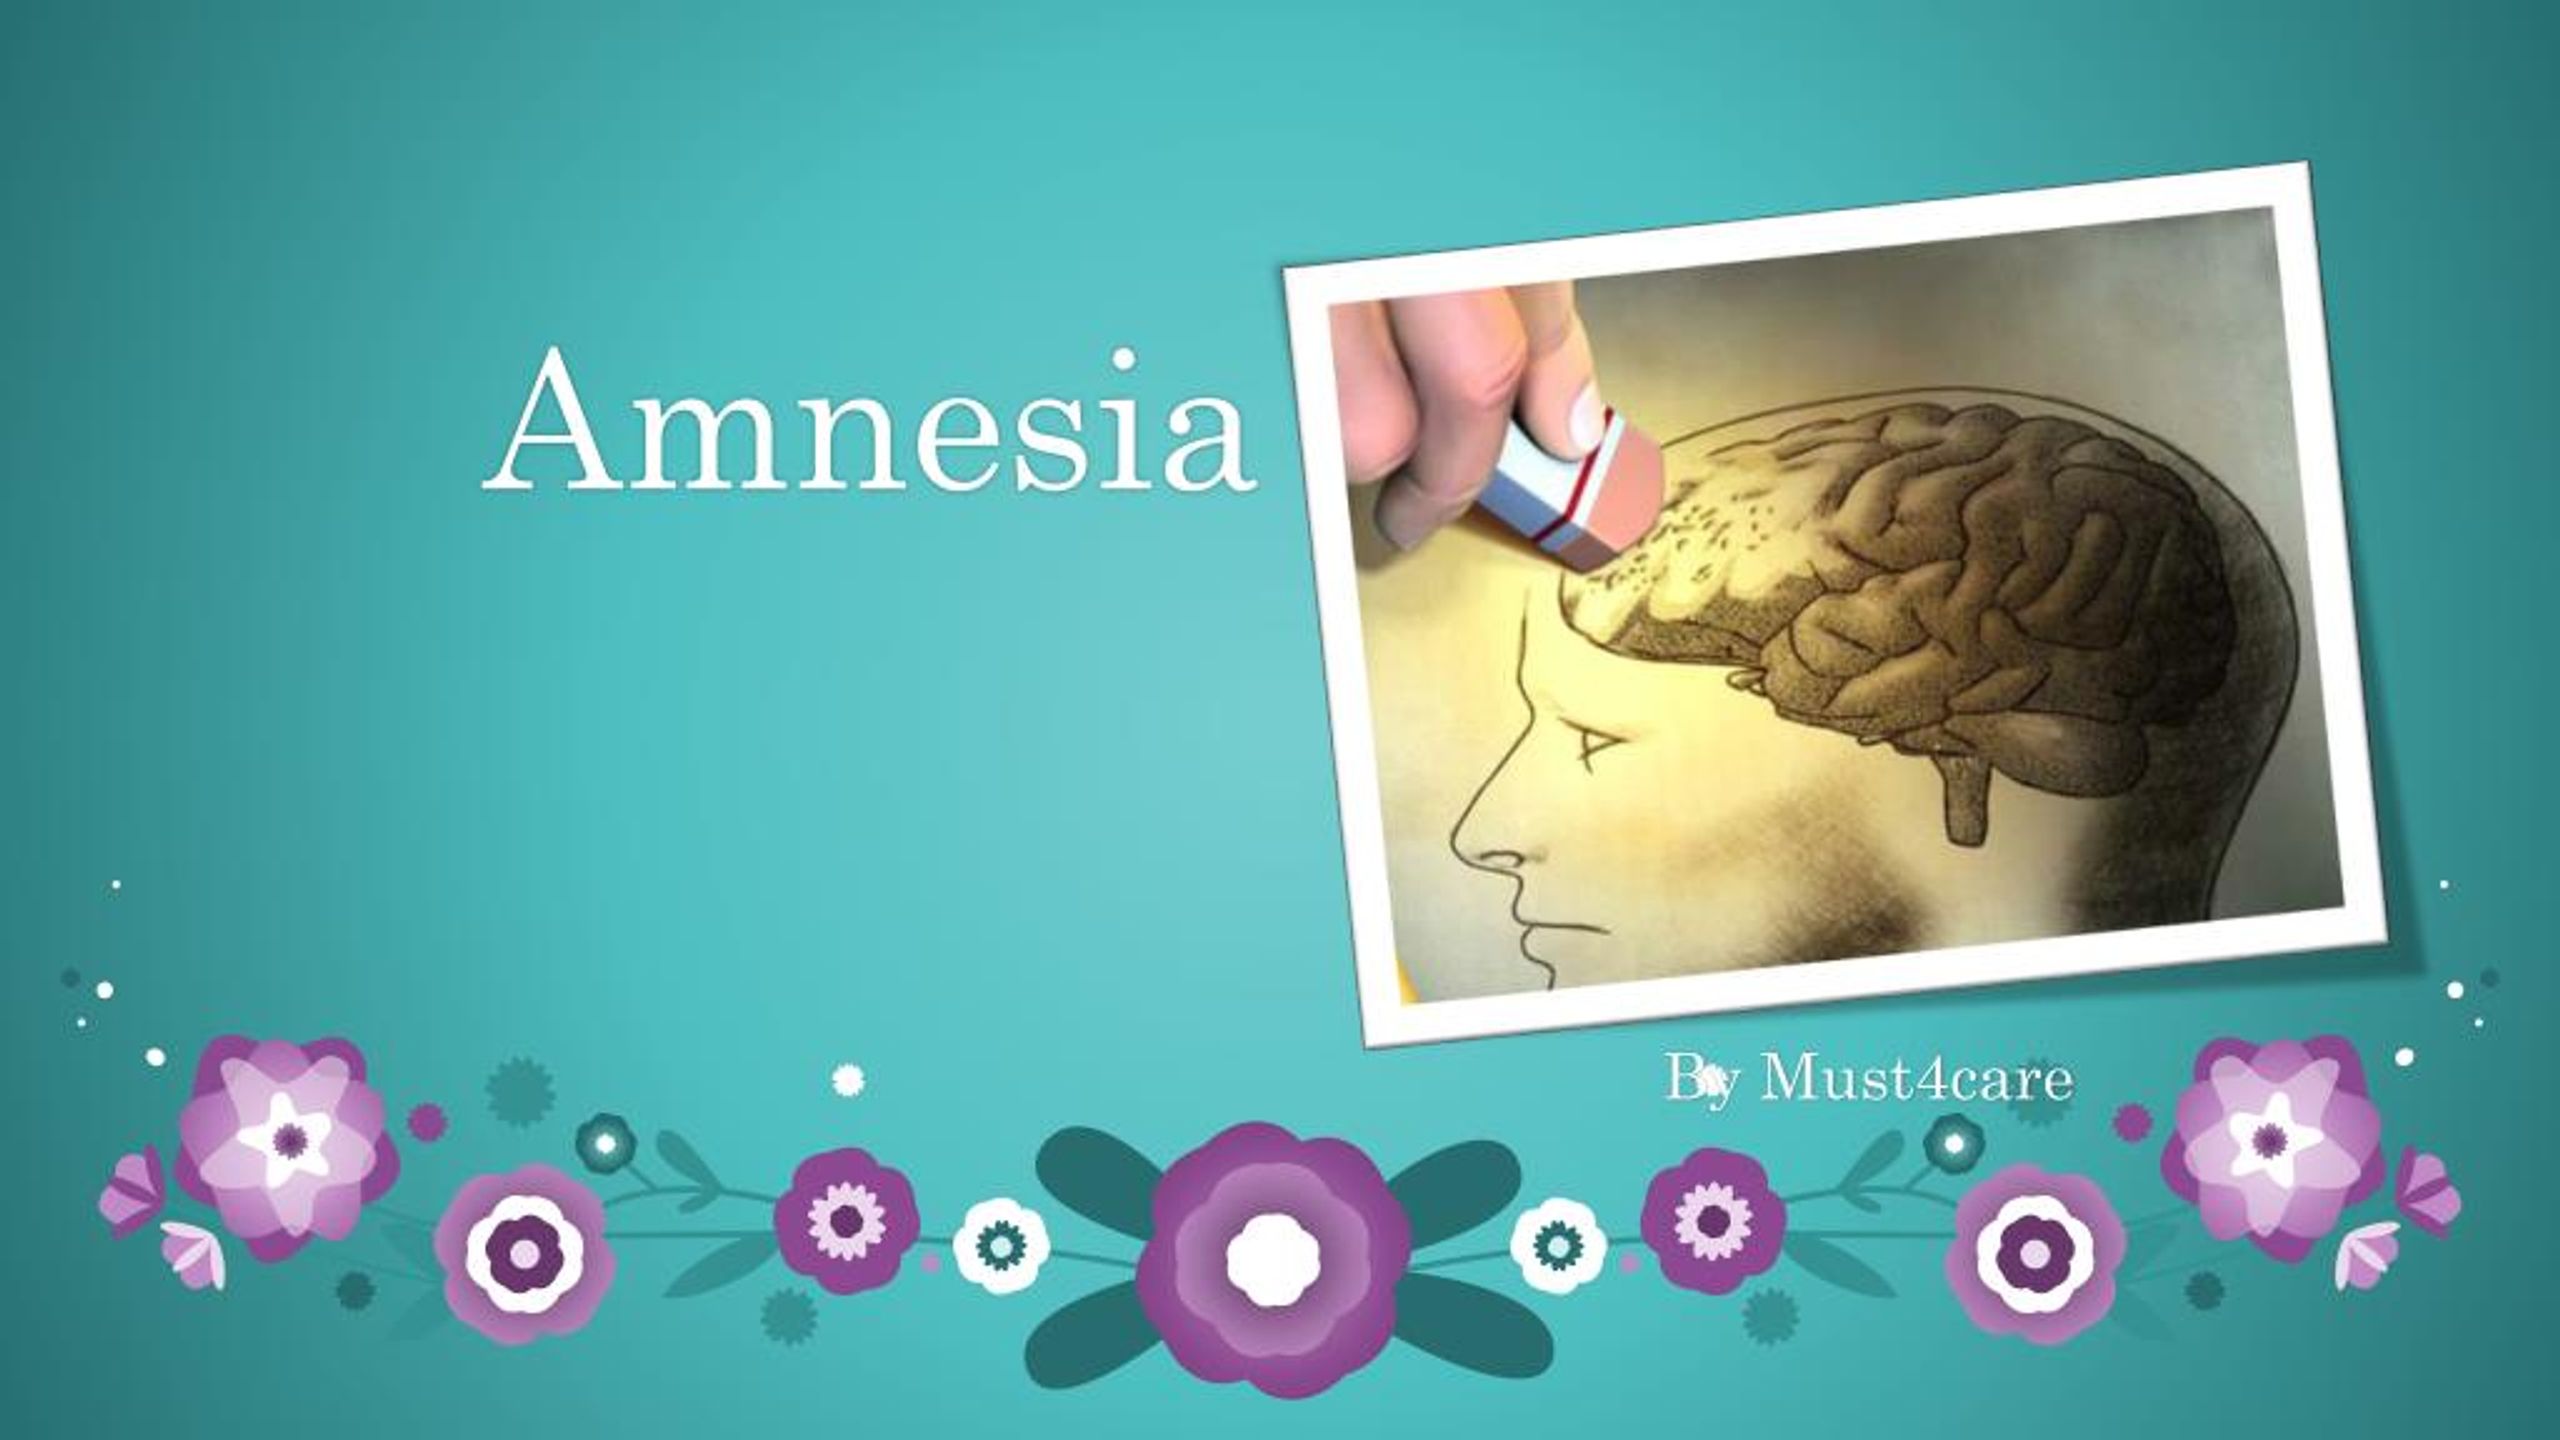 treatments for amnesia